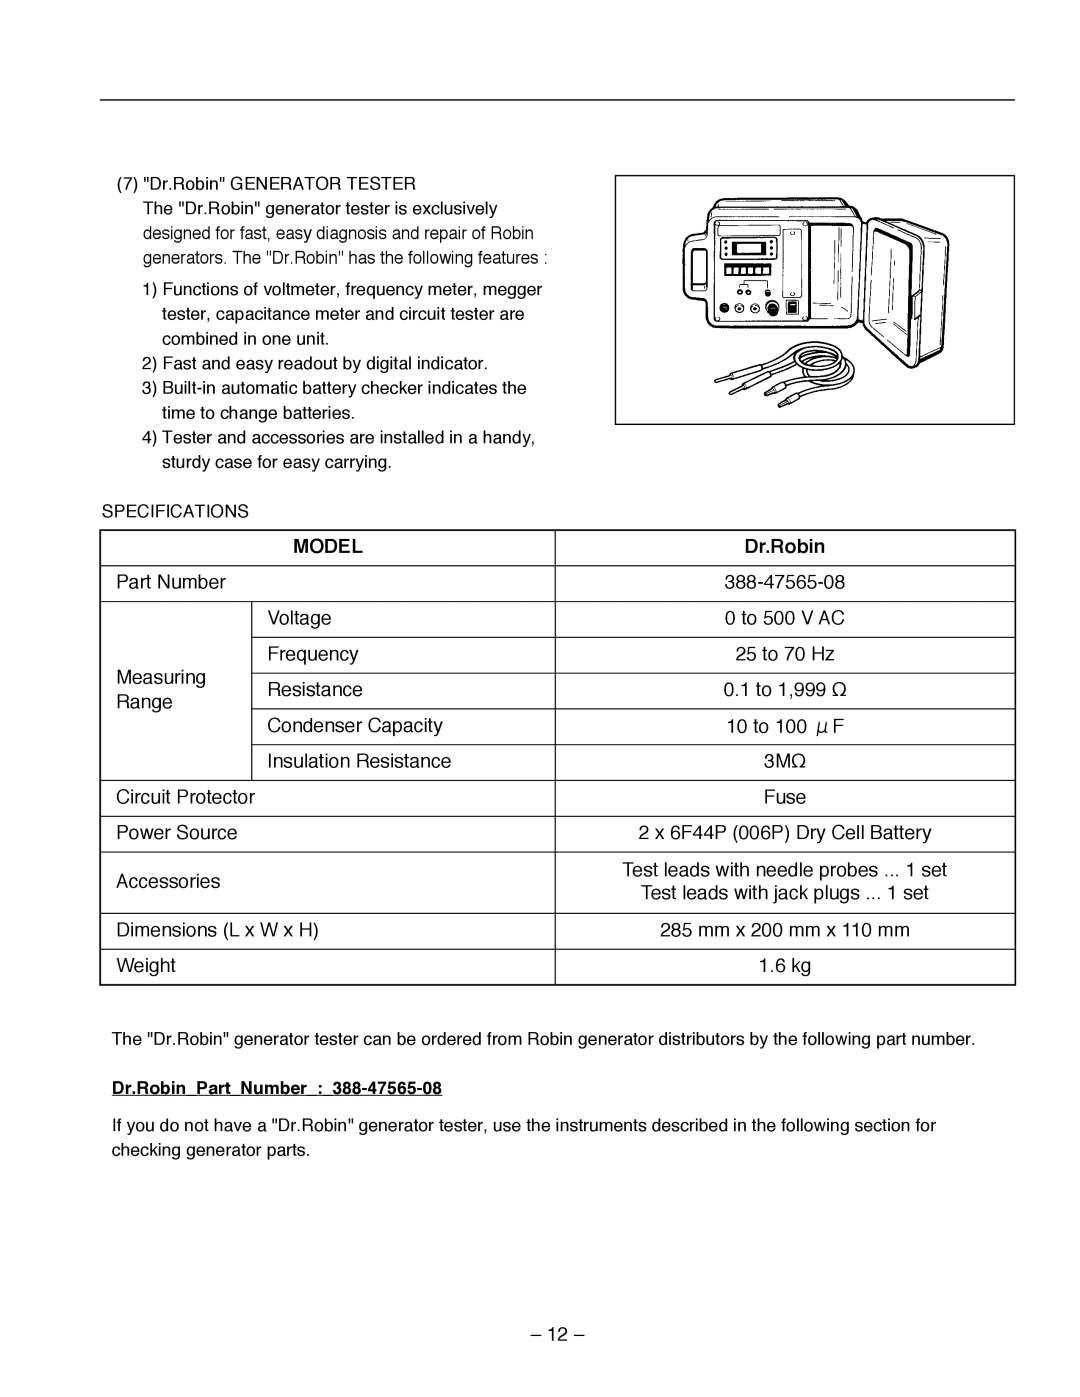 Subaru Robin Power Products R1700i service manual Model, Dr.Robin 